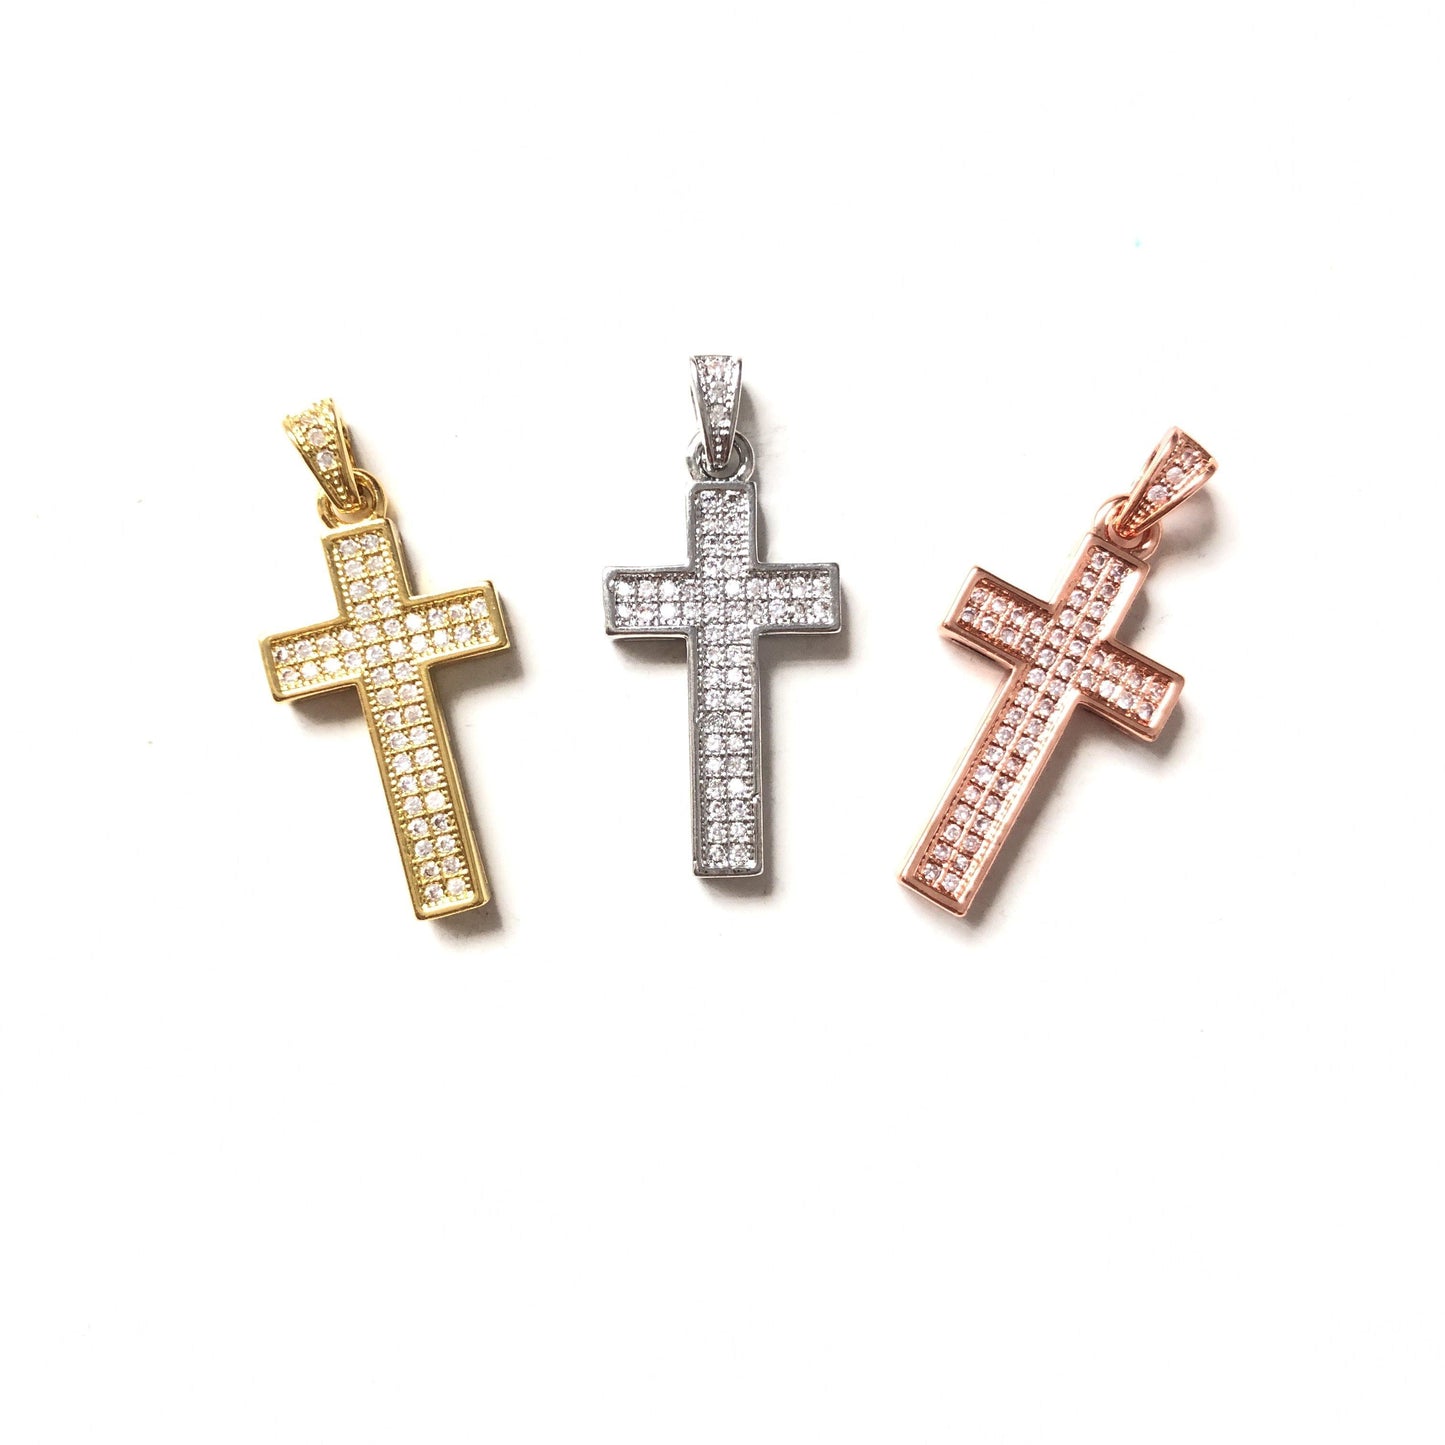 10pcs/lot 25*13mm CZ Paved Cross Charms CZ Paved Charms Crosses Charms Beads Beyond